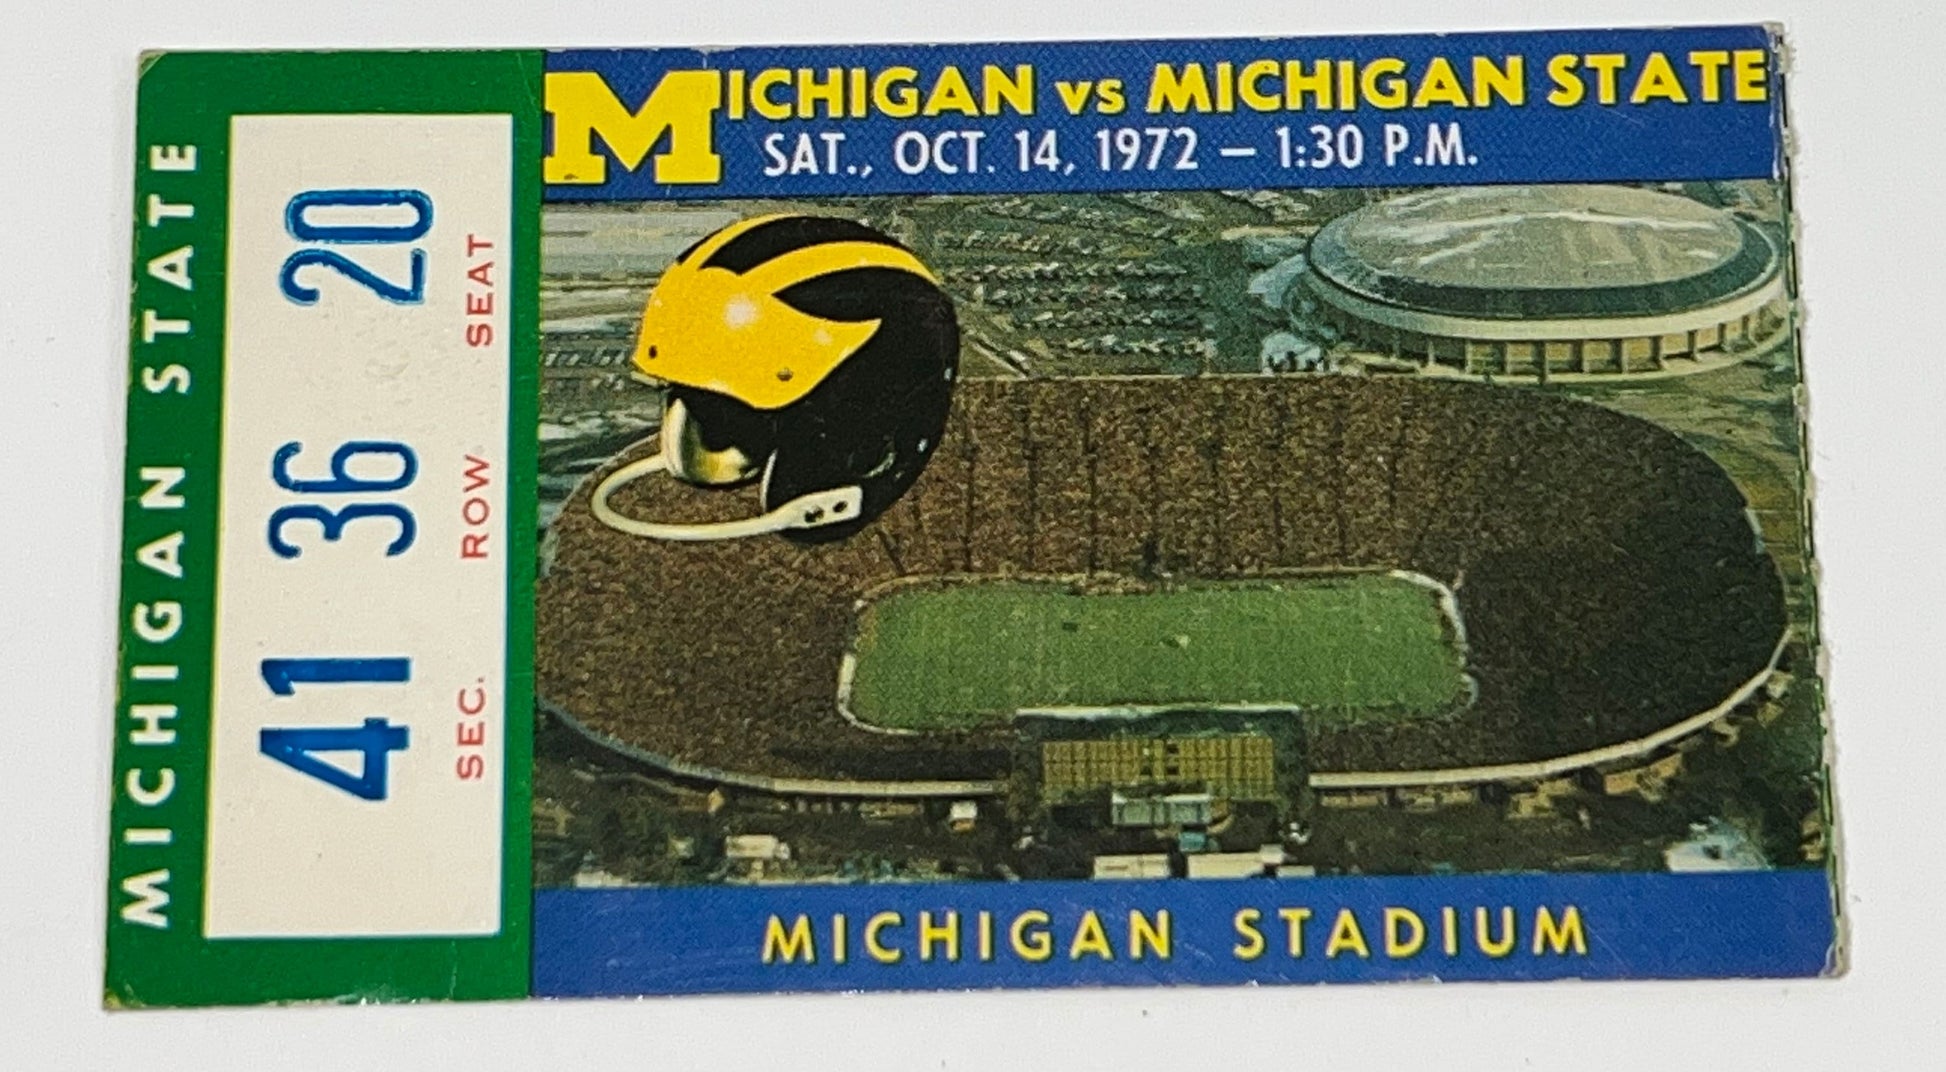 Vintage football Michigan vs Michigan state 1972 Michigan stadium ticket stub